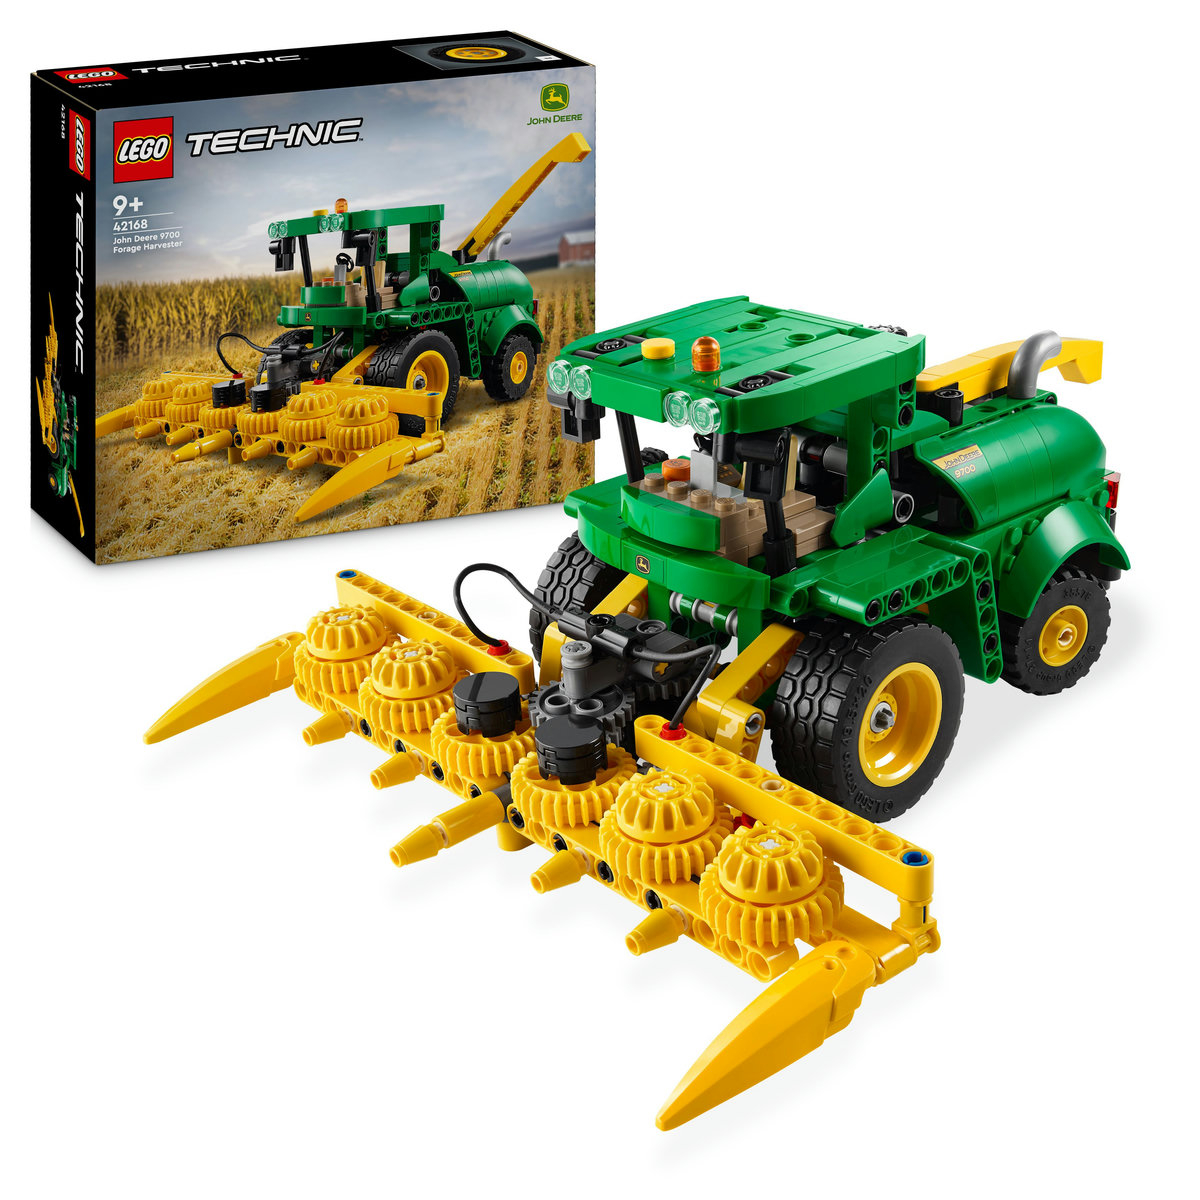 LEGO Technic - John Deere 9700 Forage Harvester 42168, 559 piese